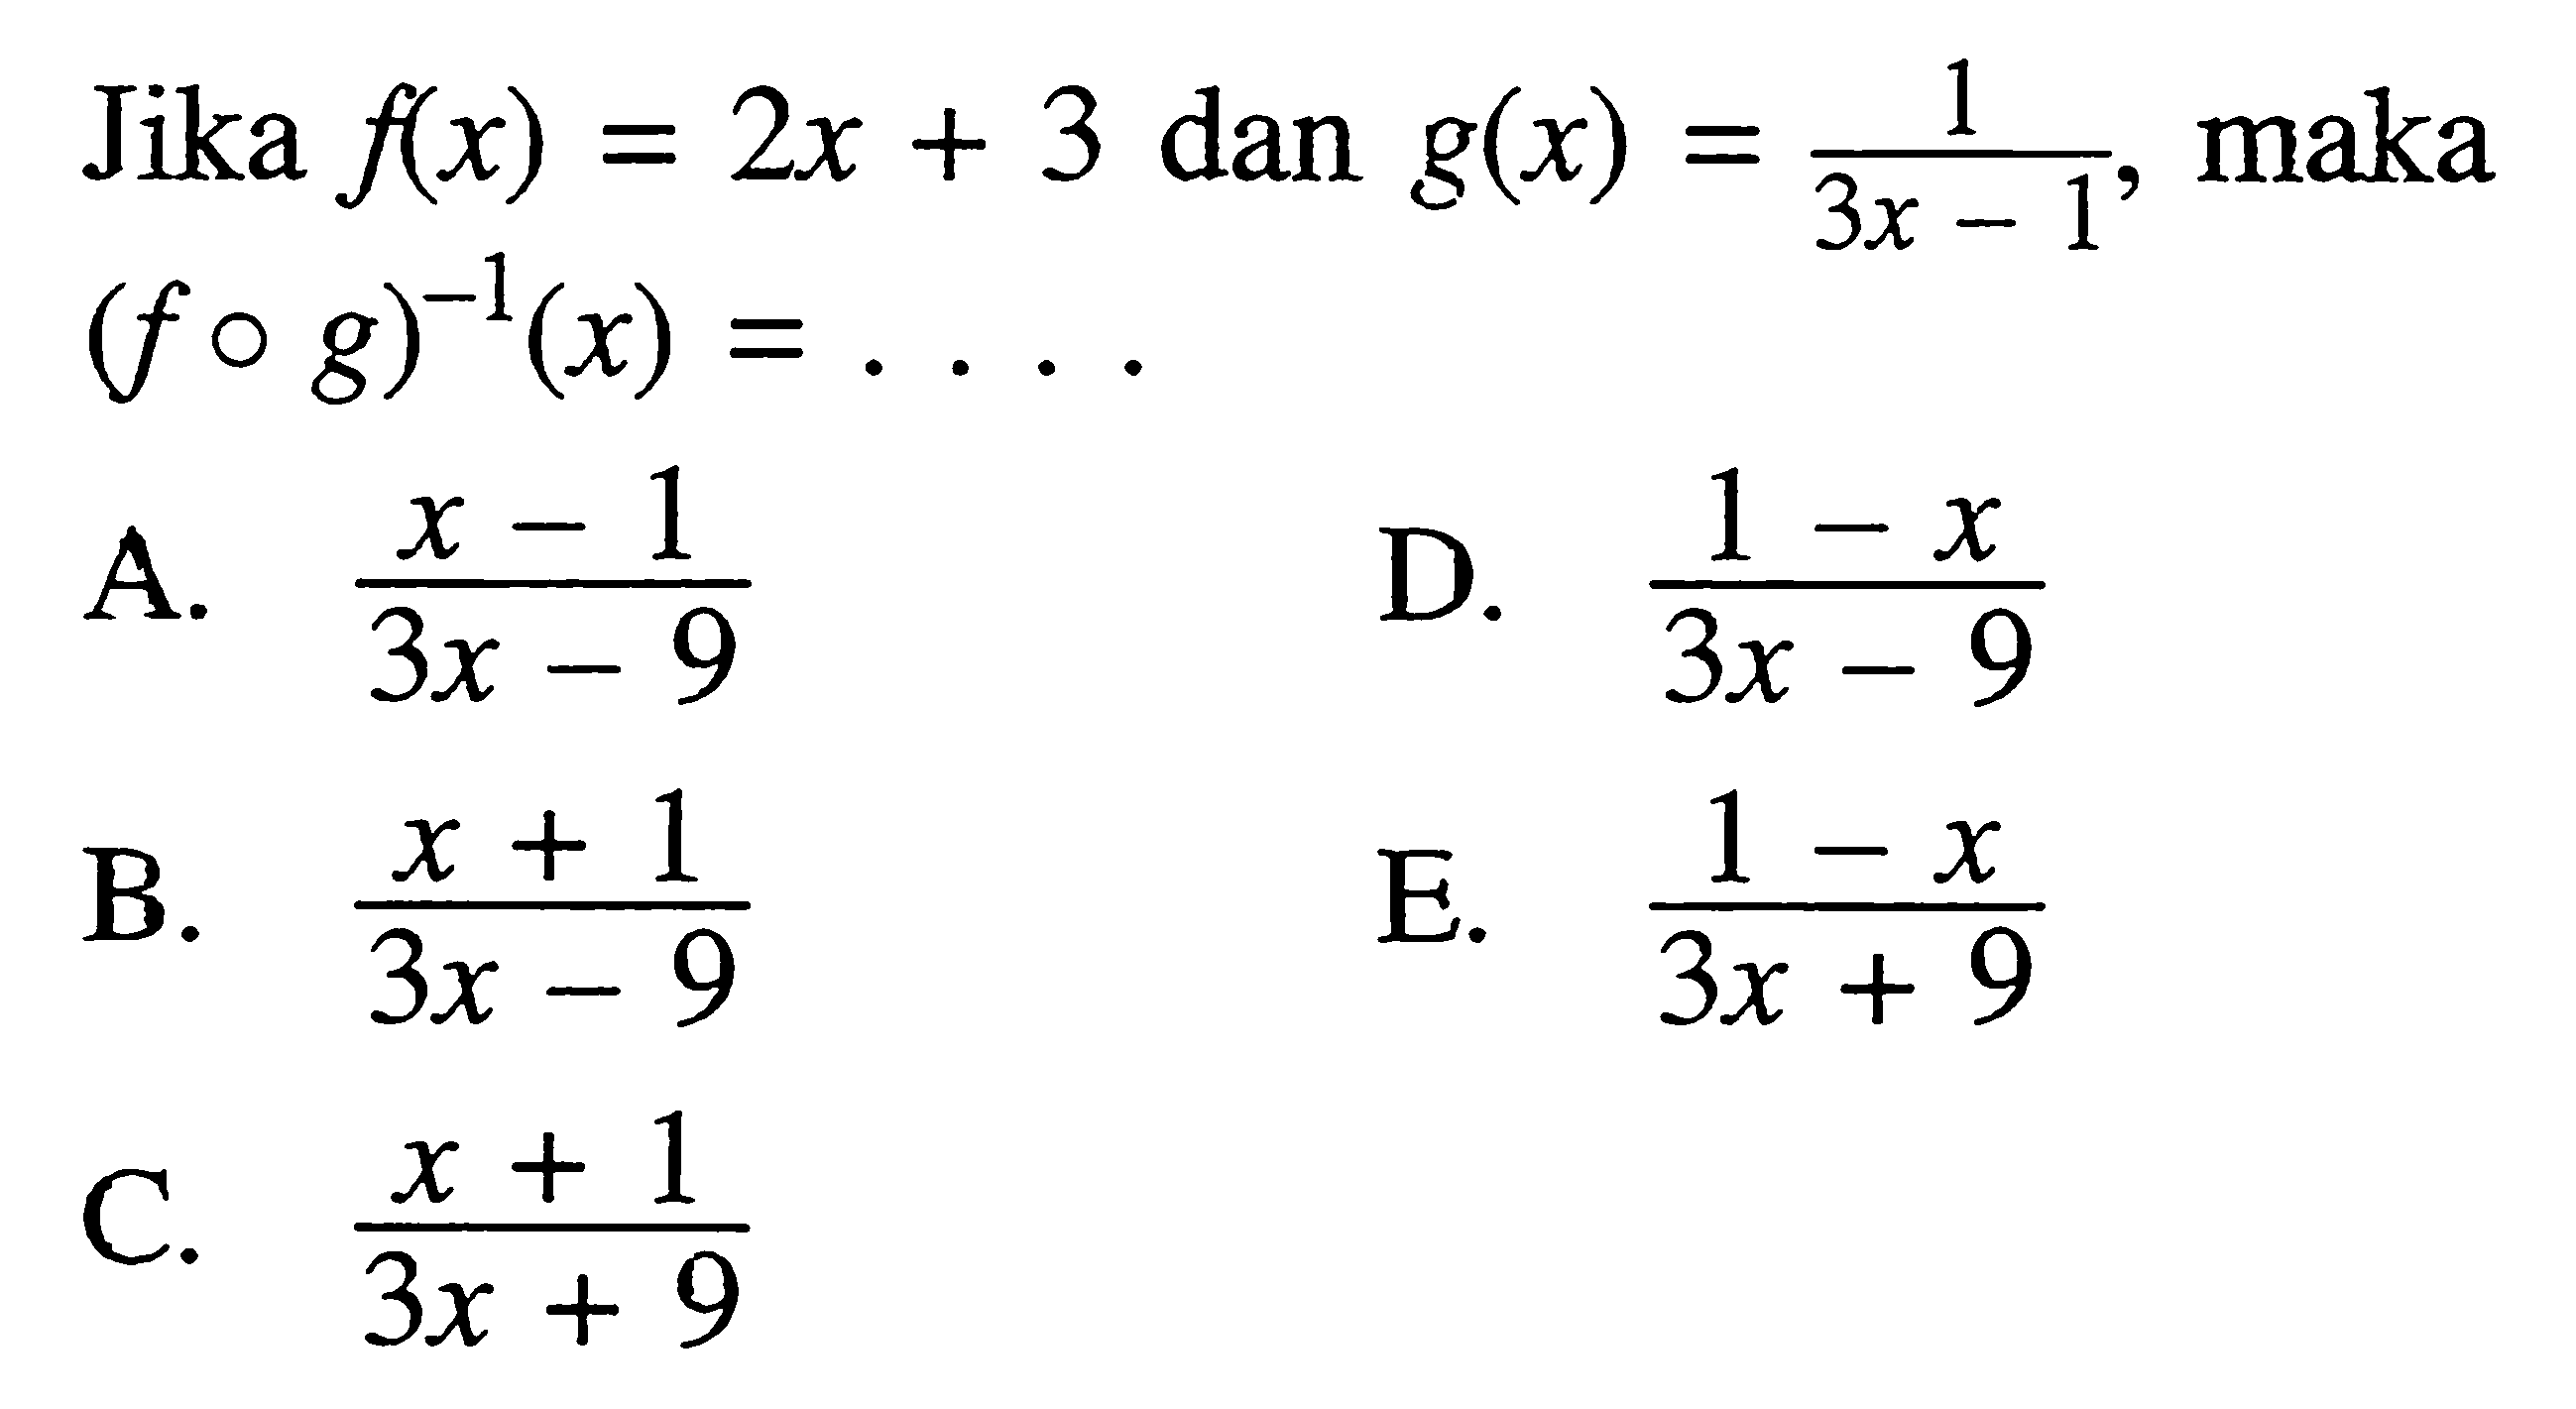 Jika f(x)=2x+3 dan g(x)=1/3x-1, maka (fog)^-1(x)=.... 